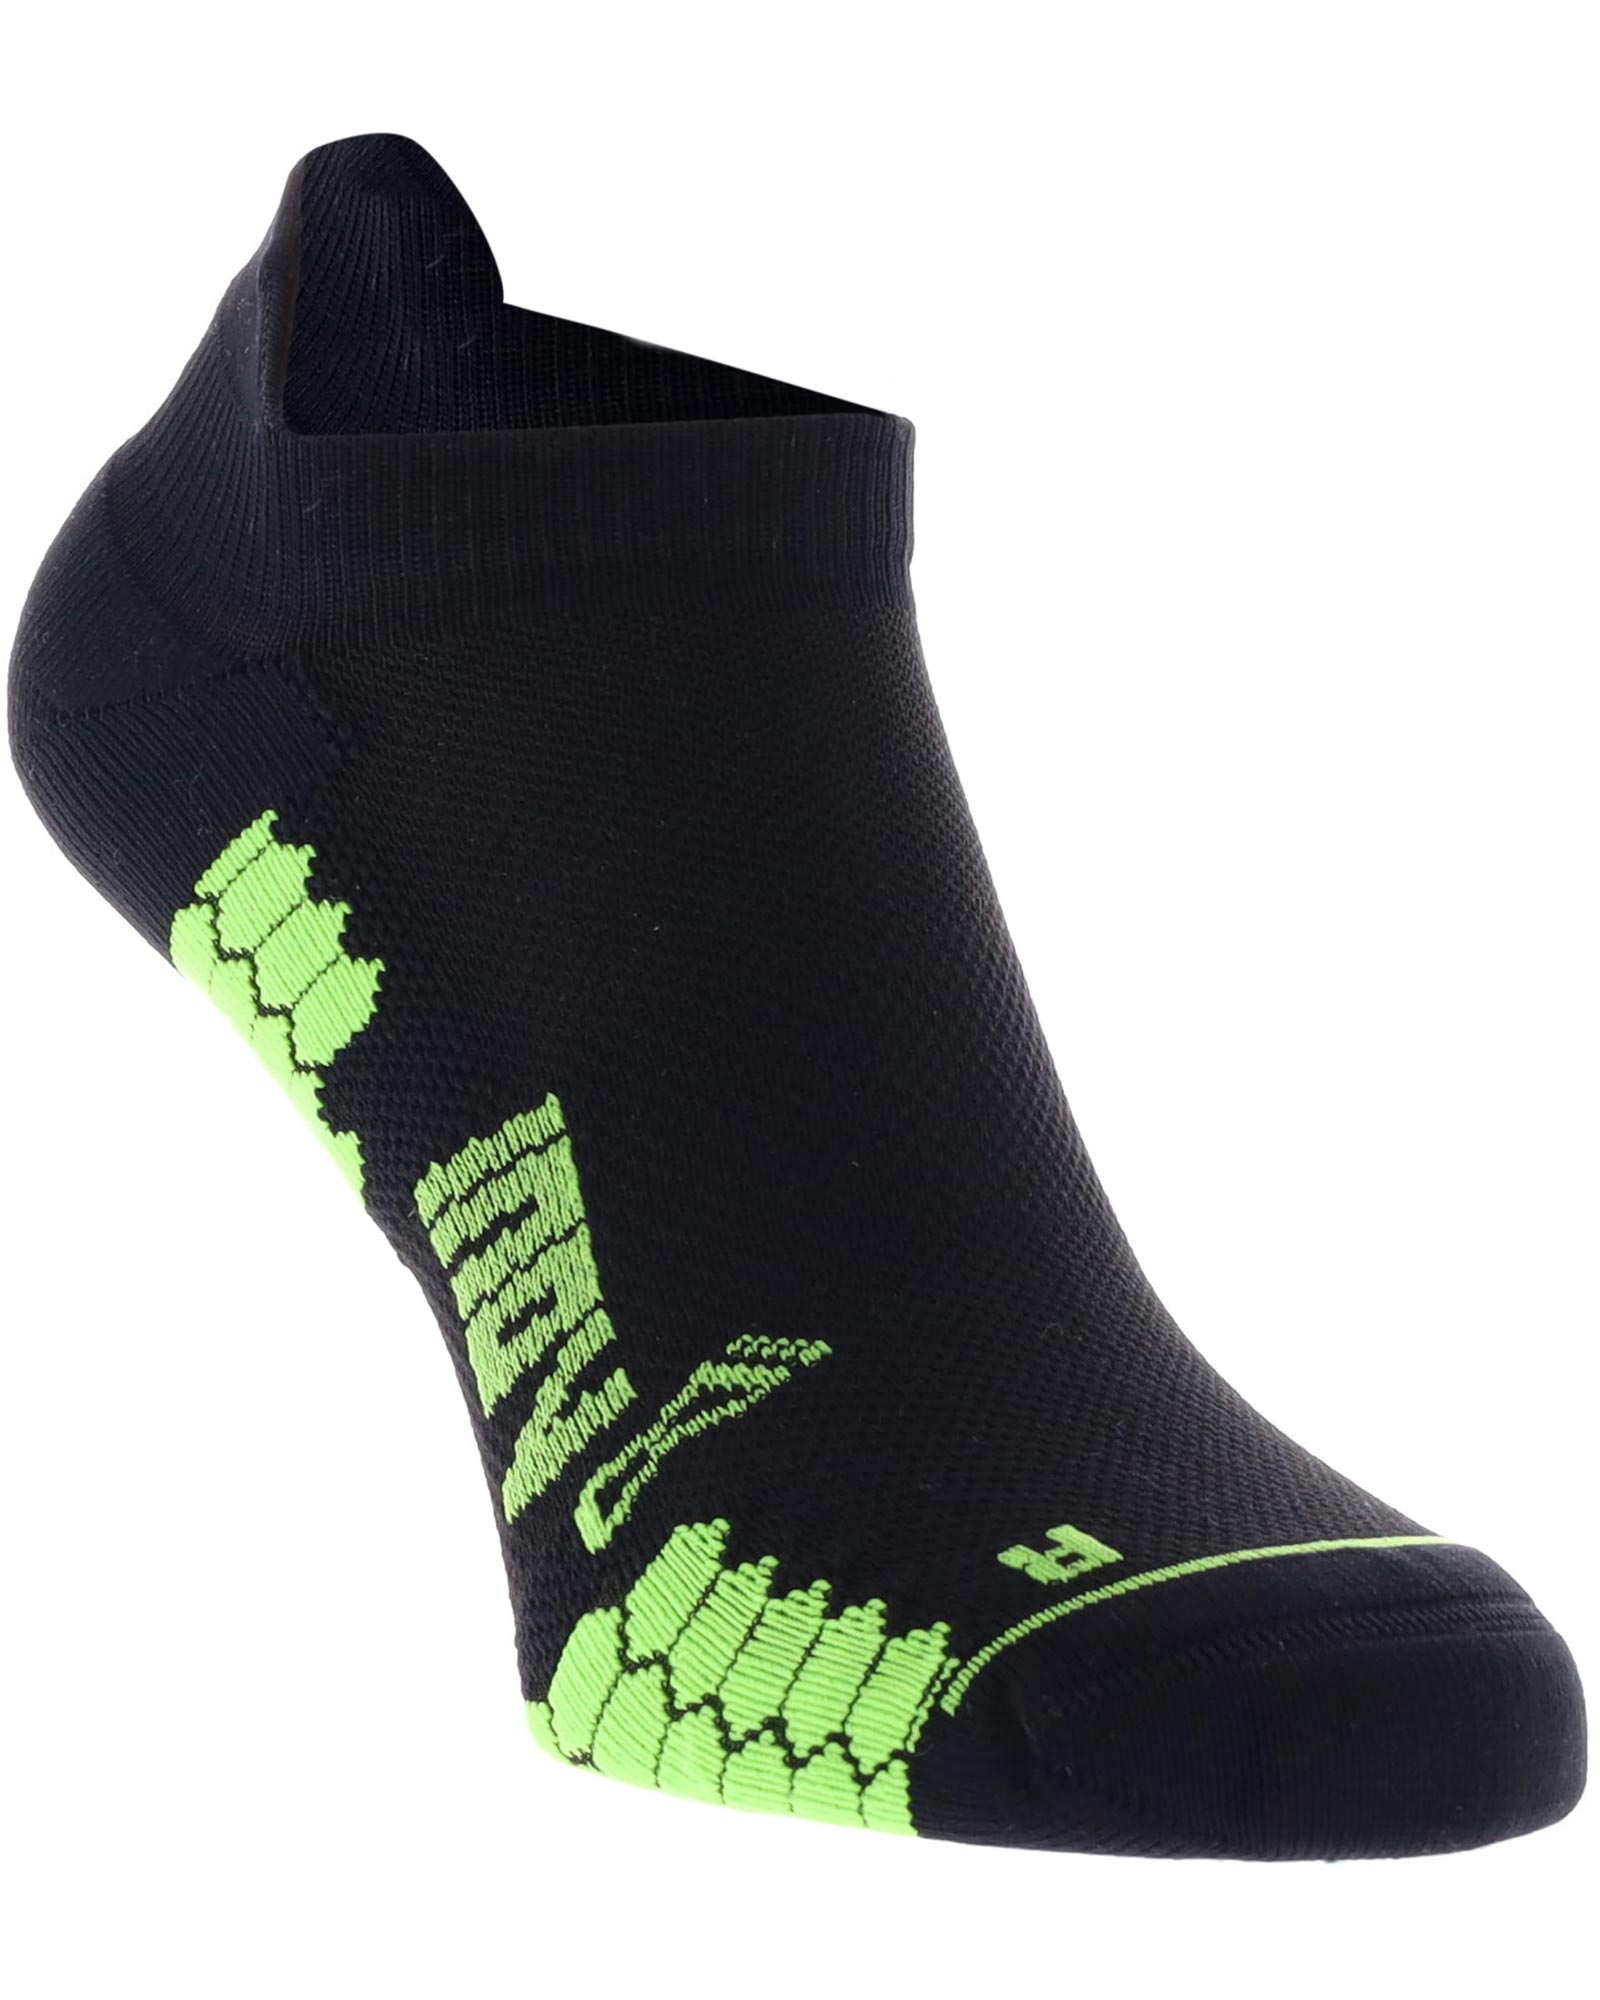 Inov 8 Trailfly Low Socks - Black/Green S